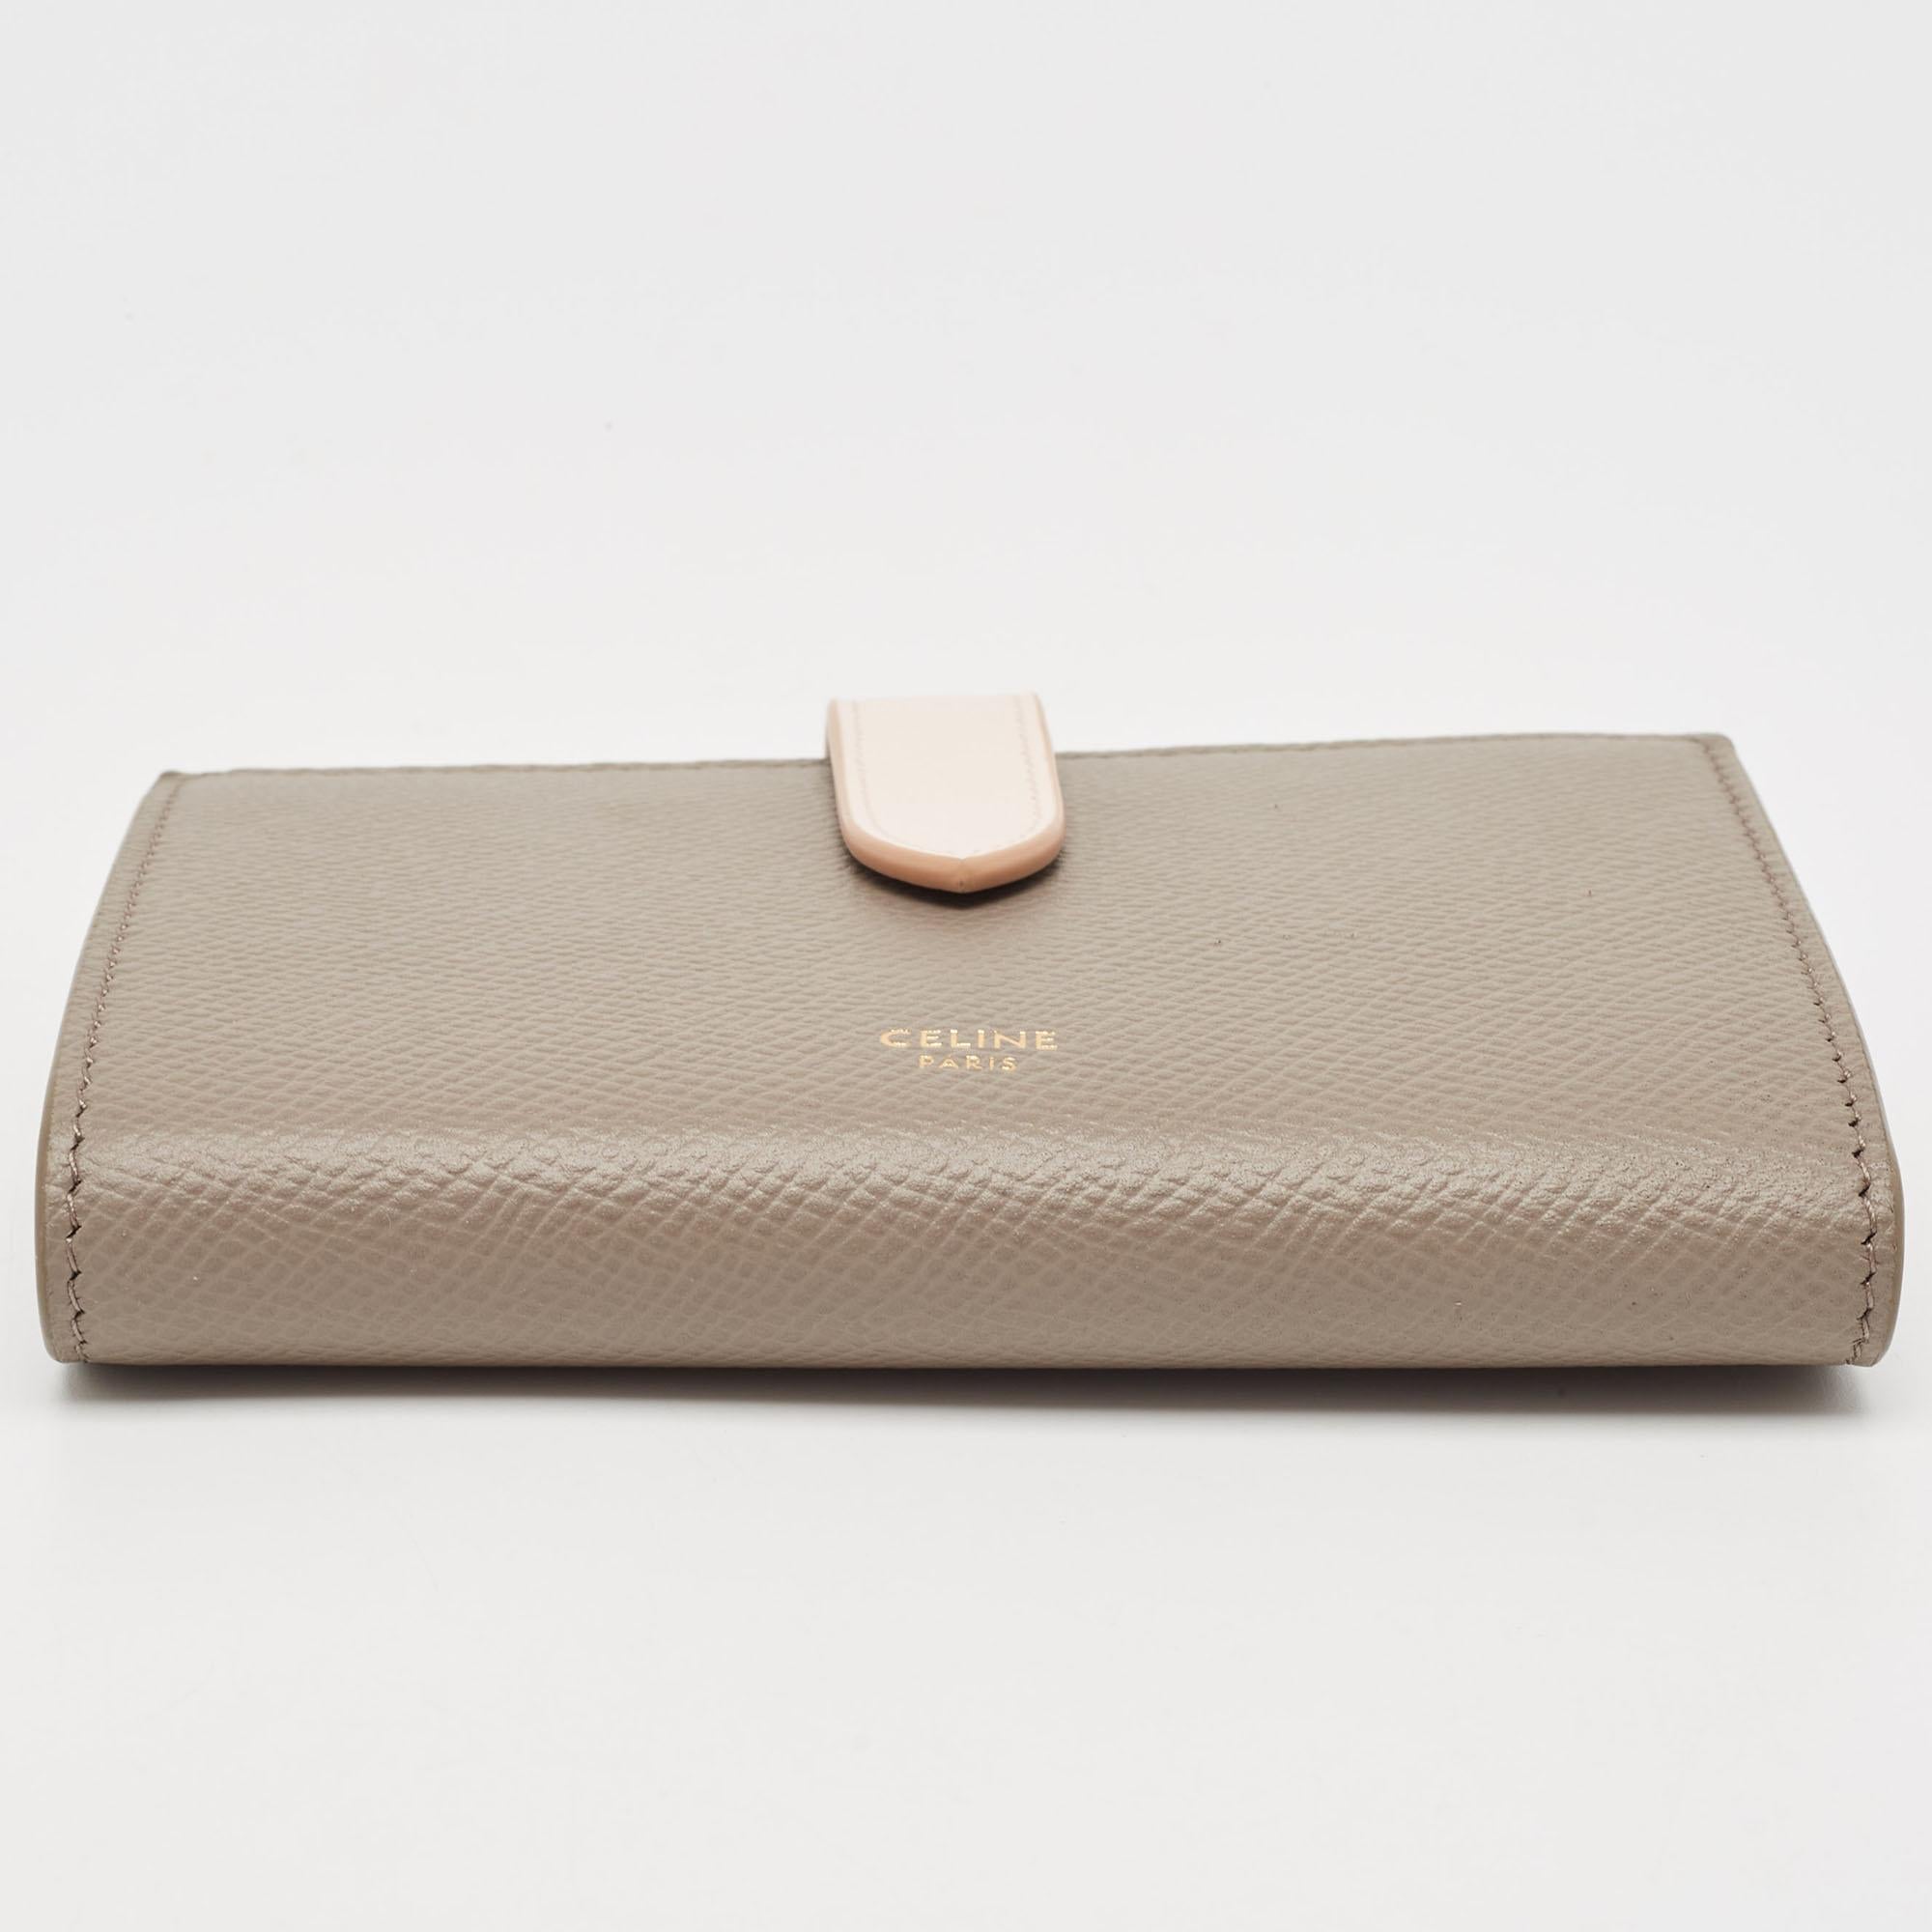 Celine Grey/Pink Leather Medium Compact Wallet 1